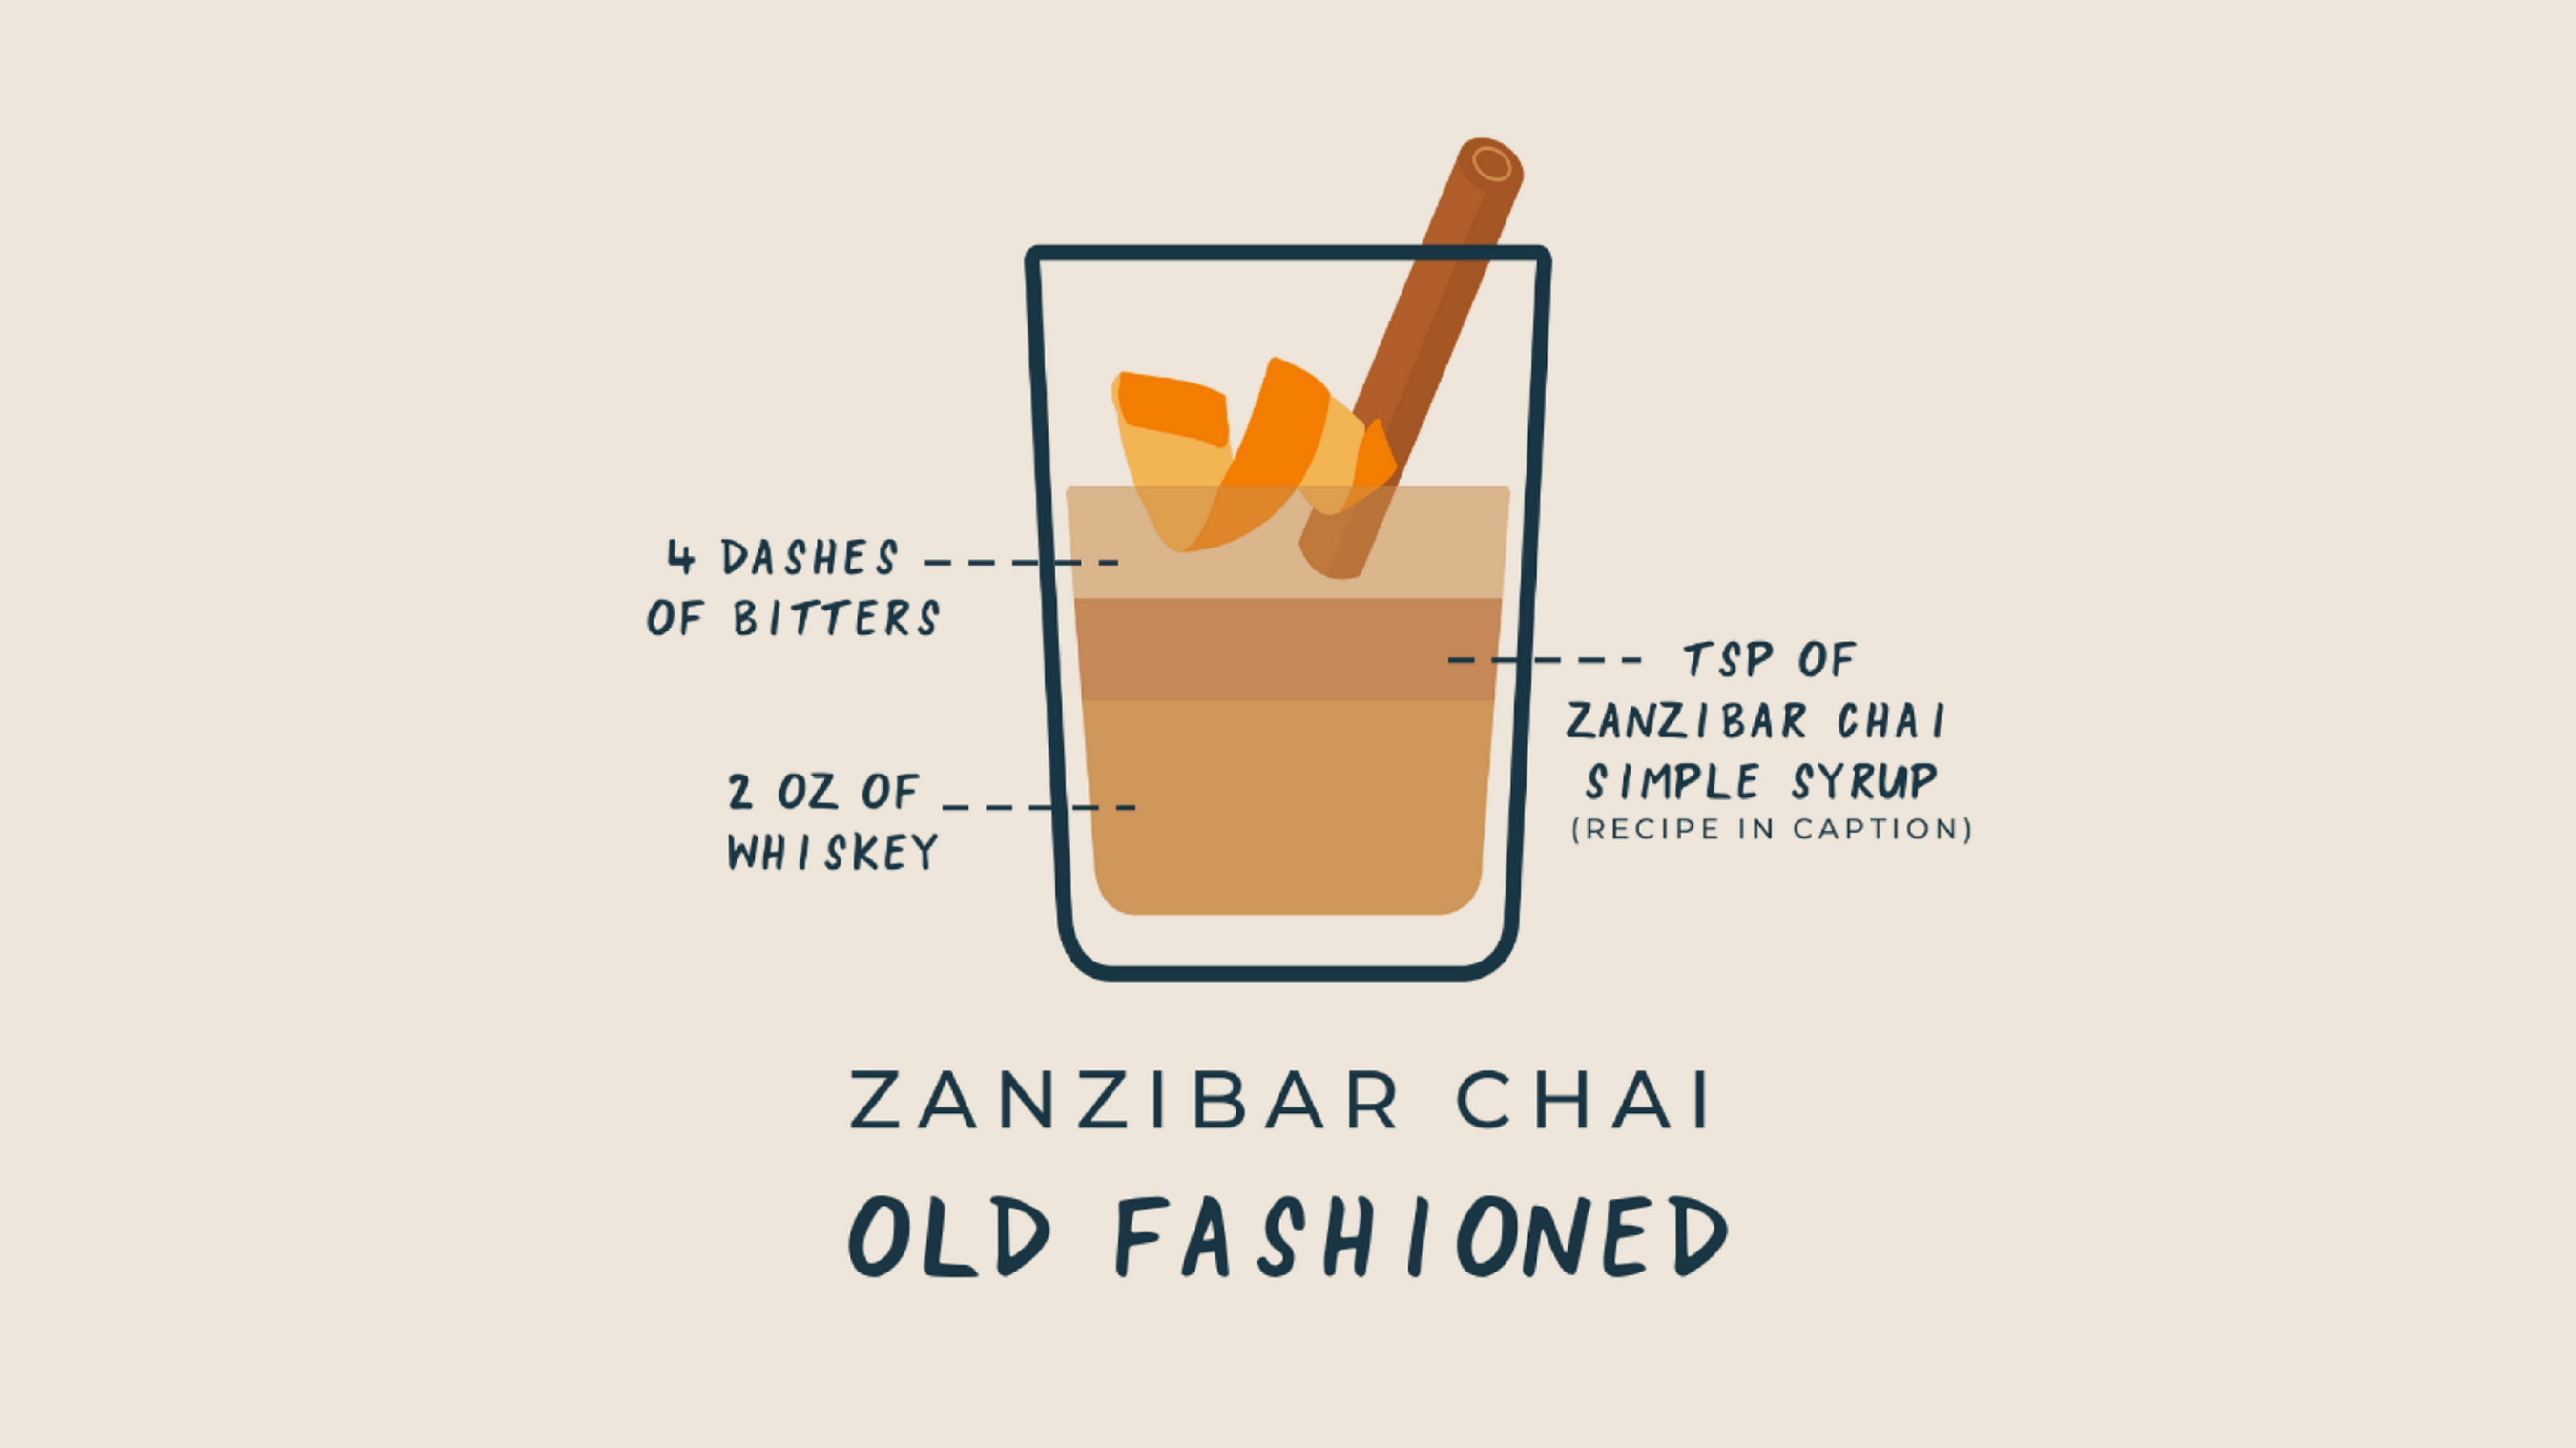 kazi-yetu-graphic-zanzibar-chai-old-fashioned-cocktail-recipe